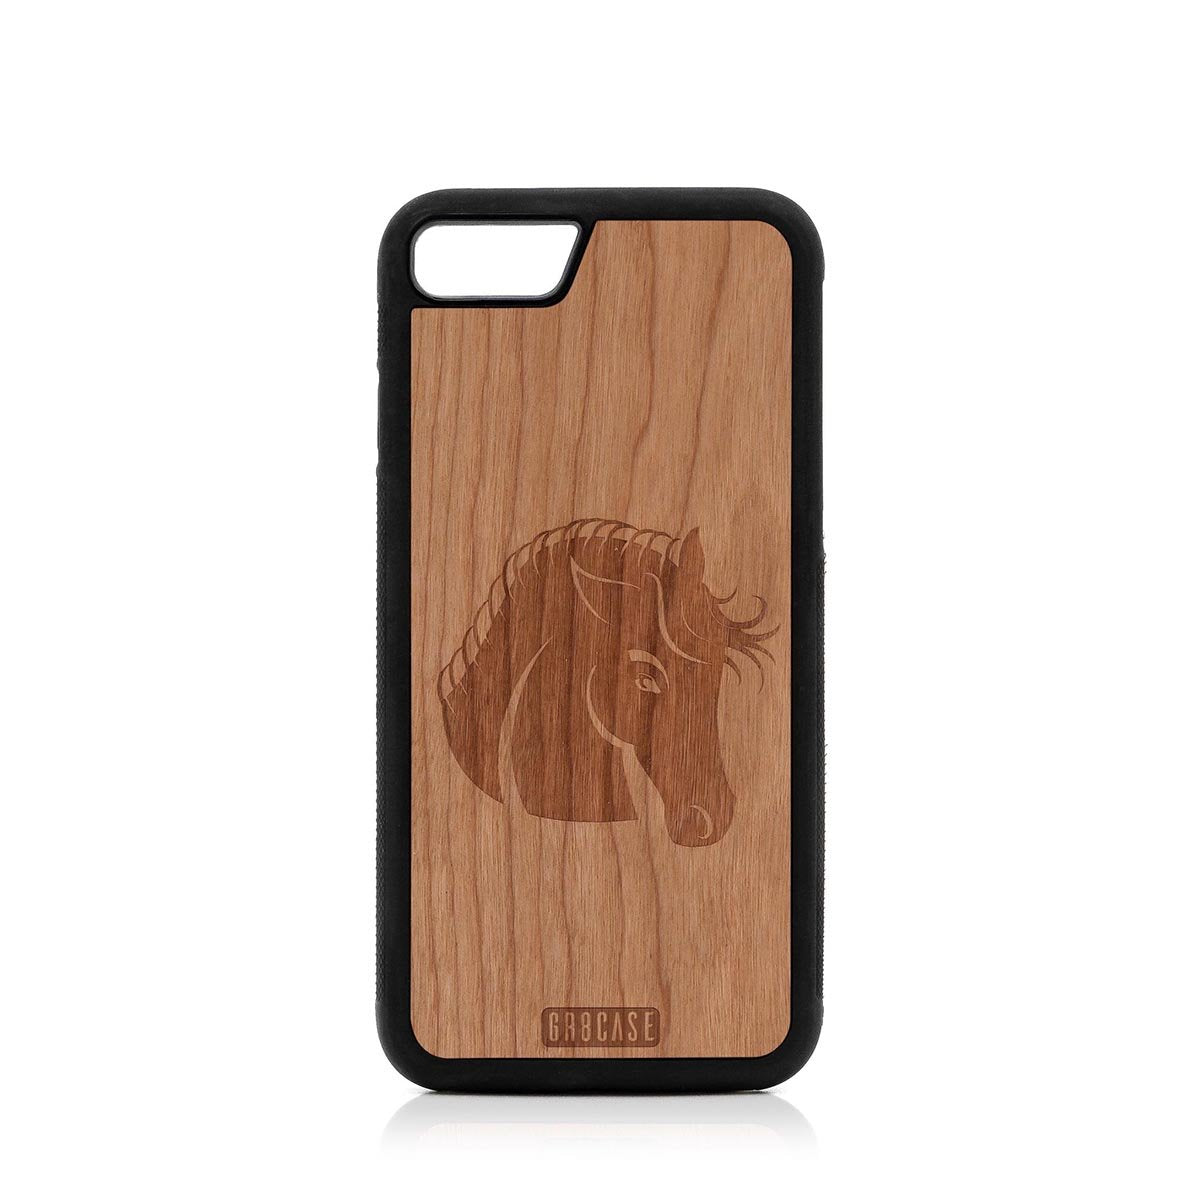 Horse Design Wood Case For iPhone SE 2020 by GR8CASE